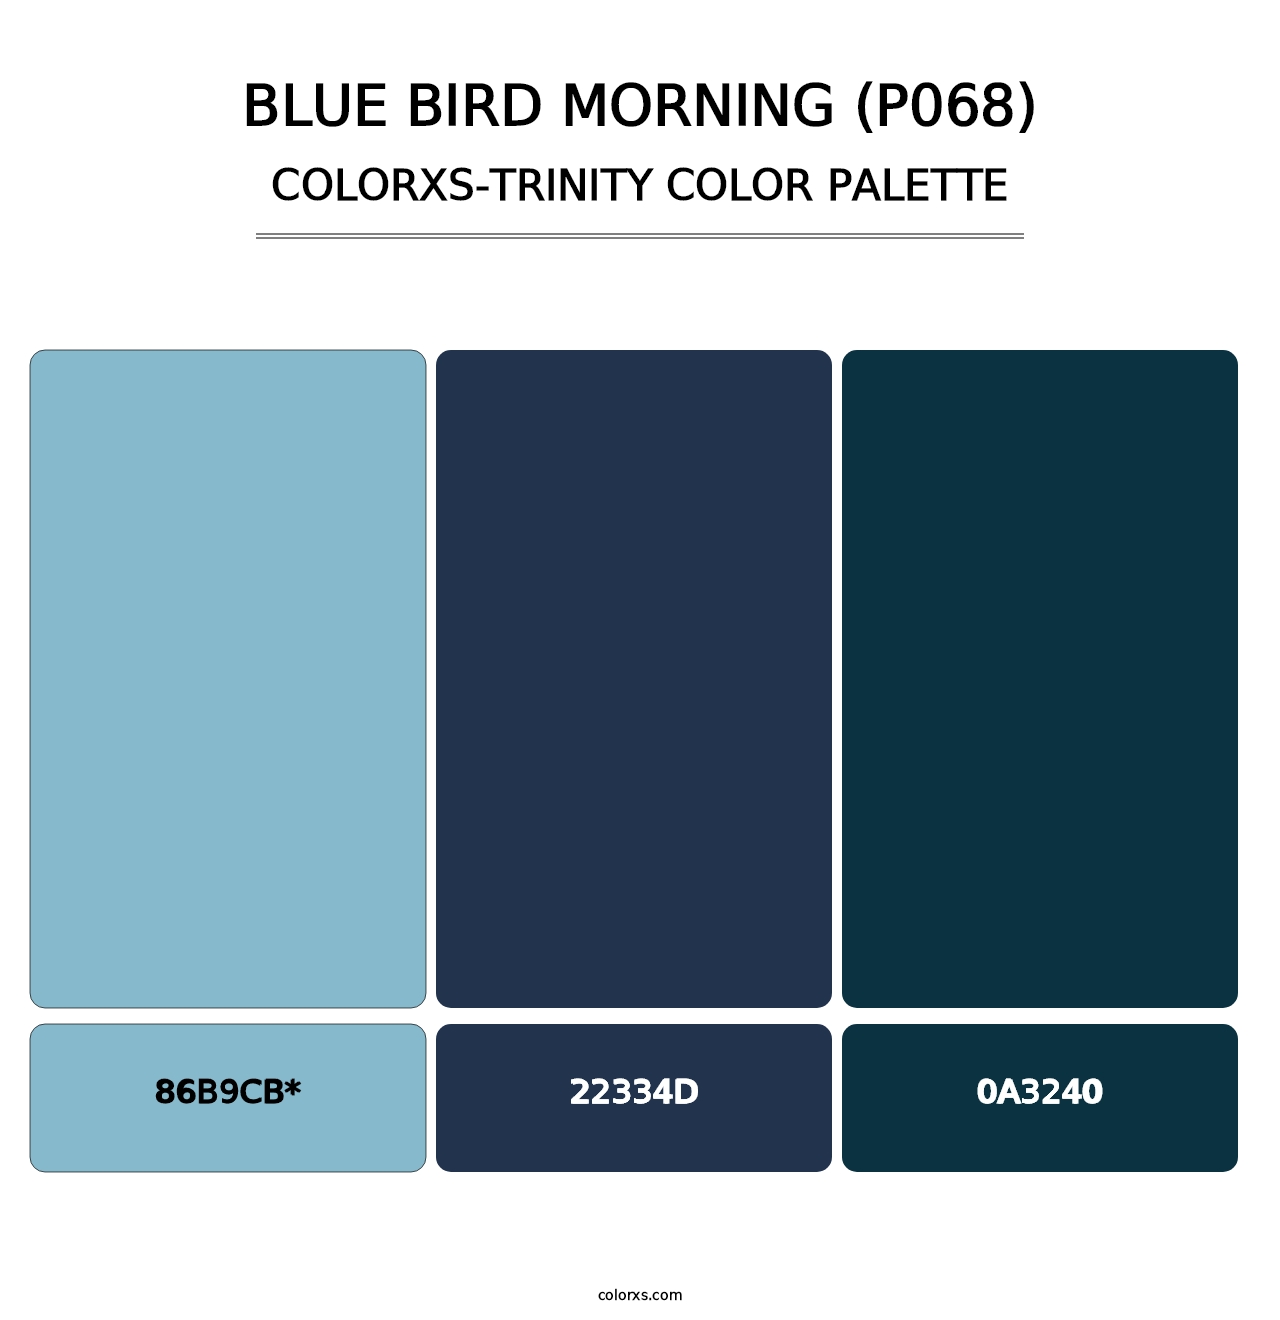 Blue Bird Morning (P068) - Colorxs Trinity Palette